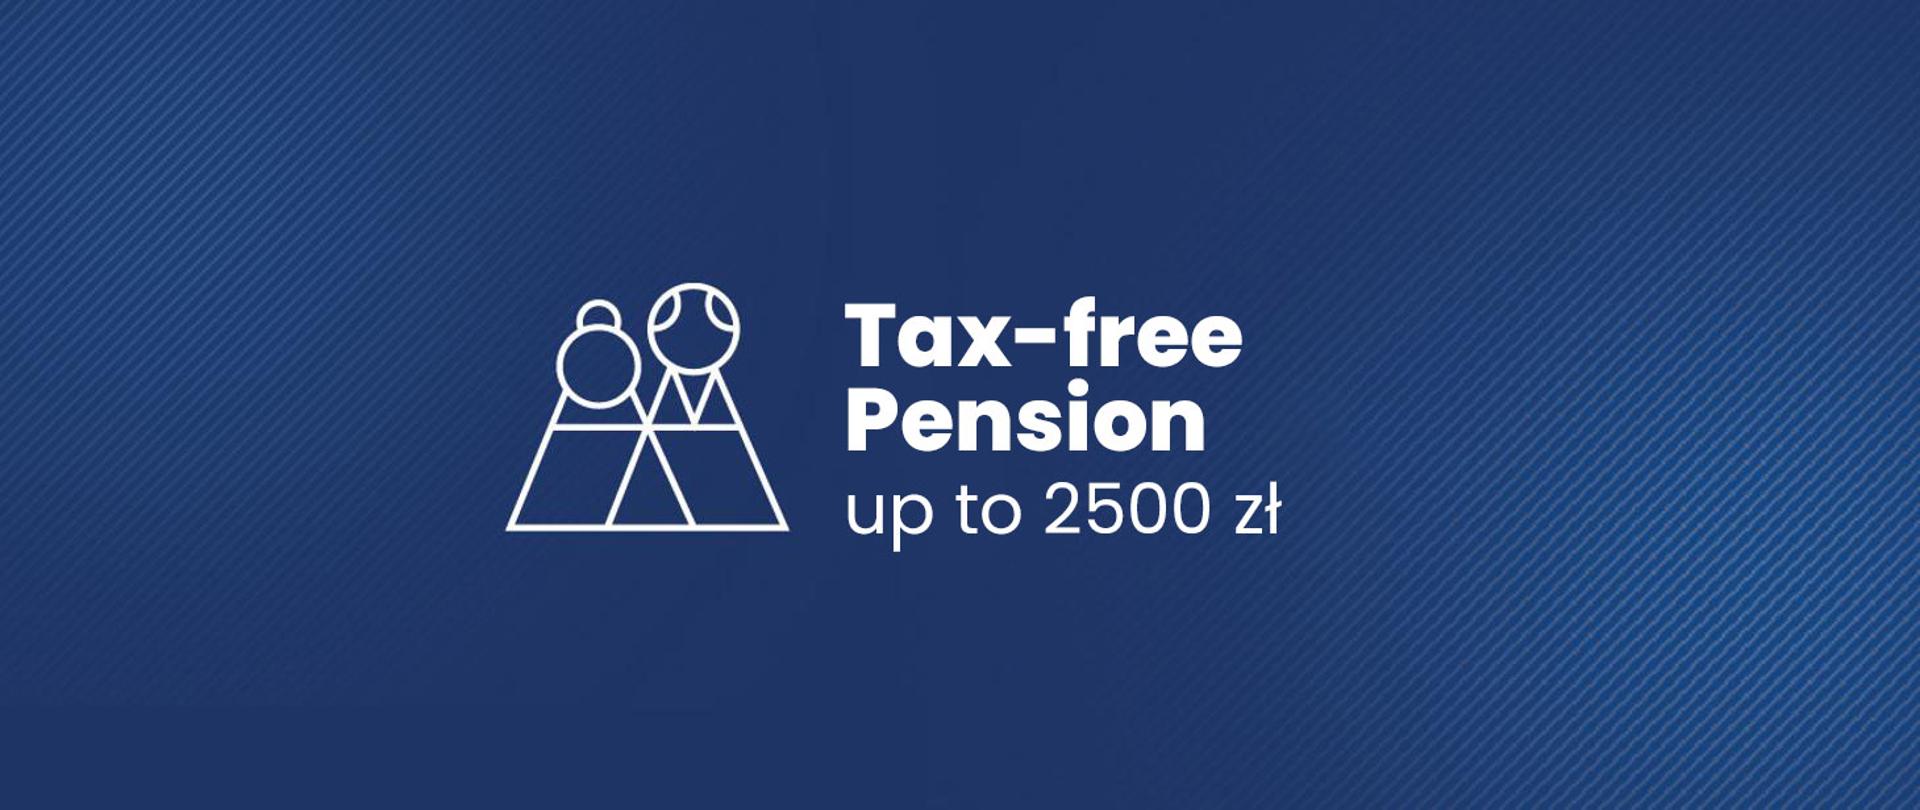 Tax-free Pension